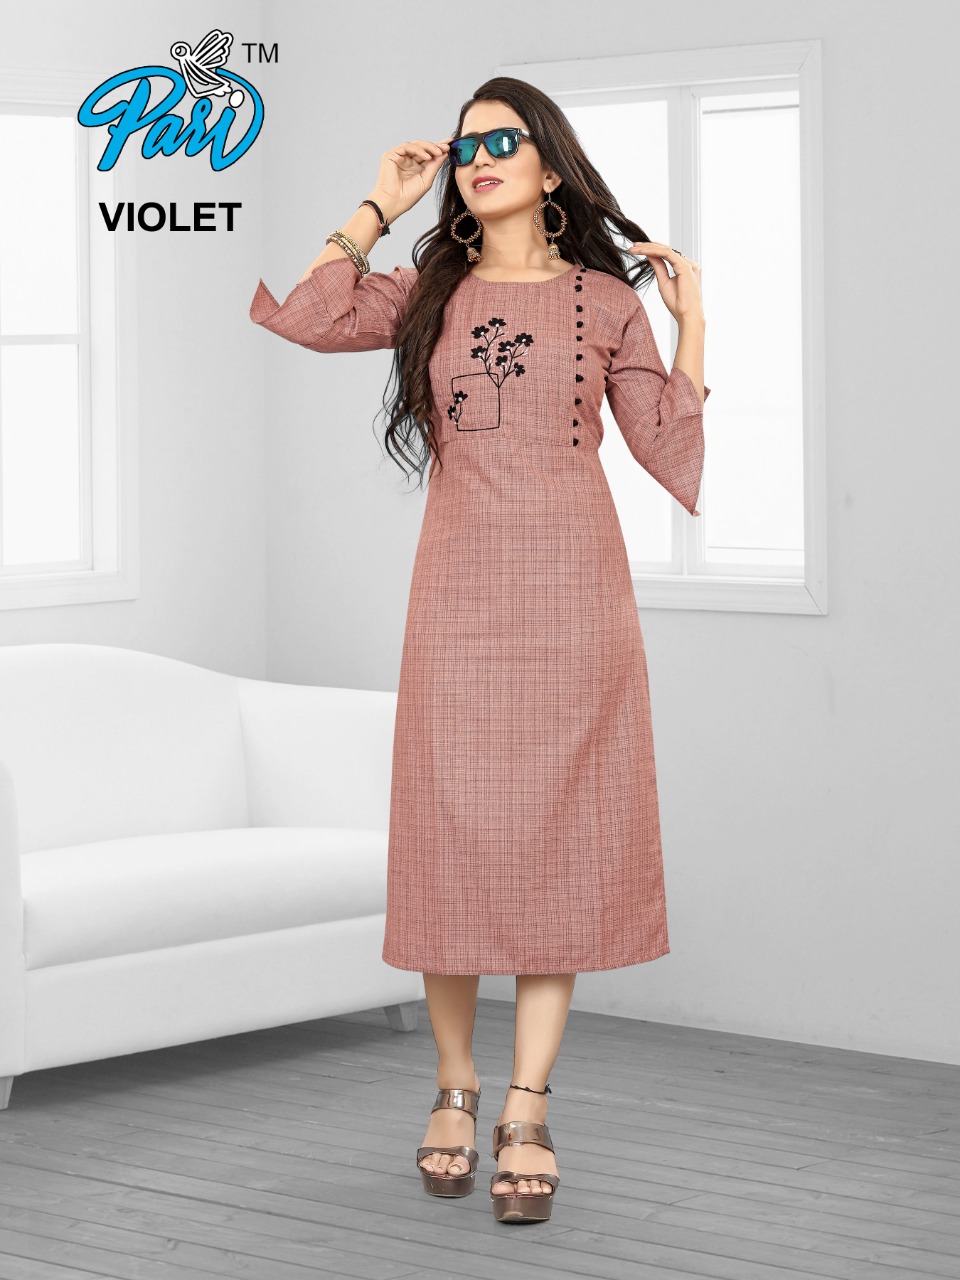 Pari Fashion Violet 1004